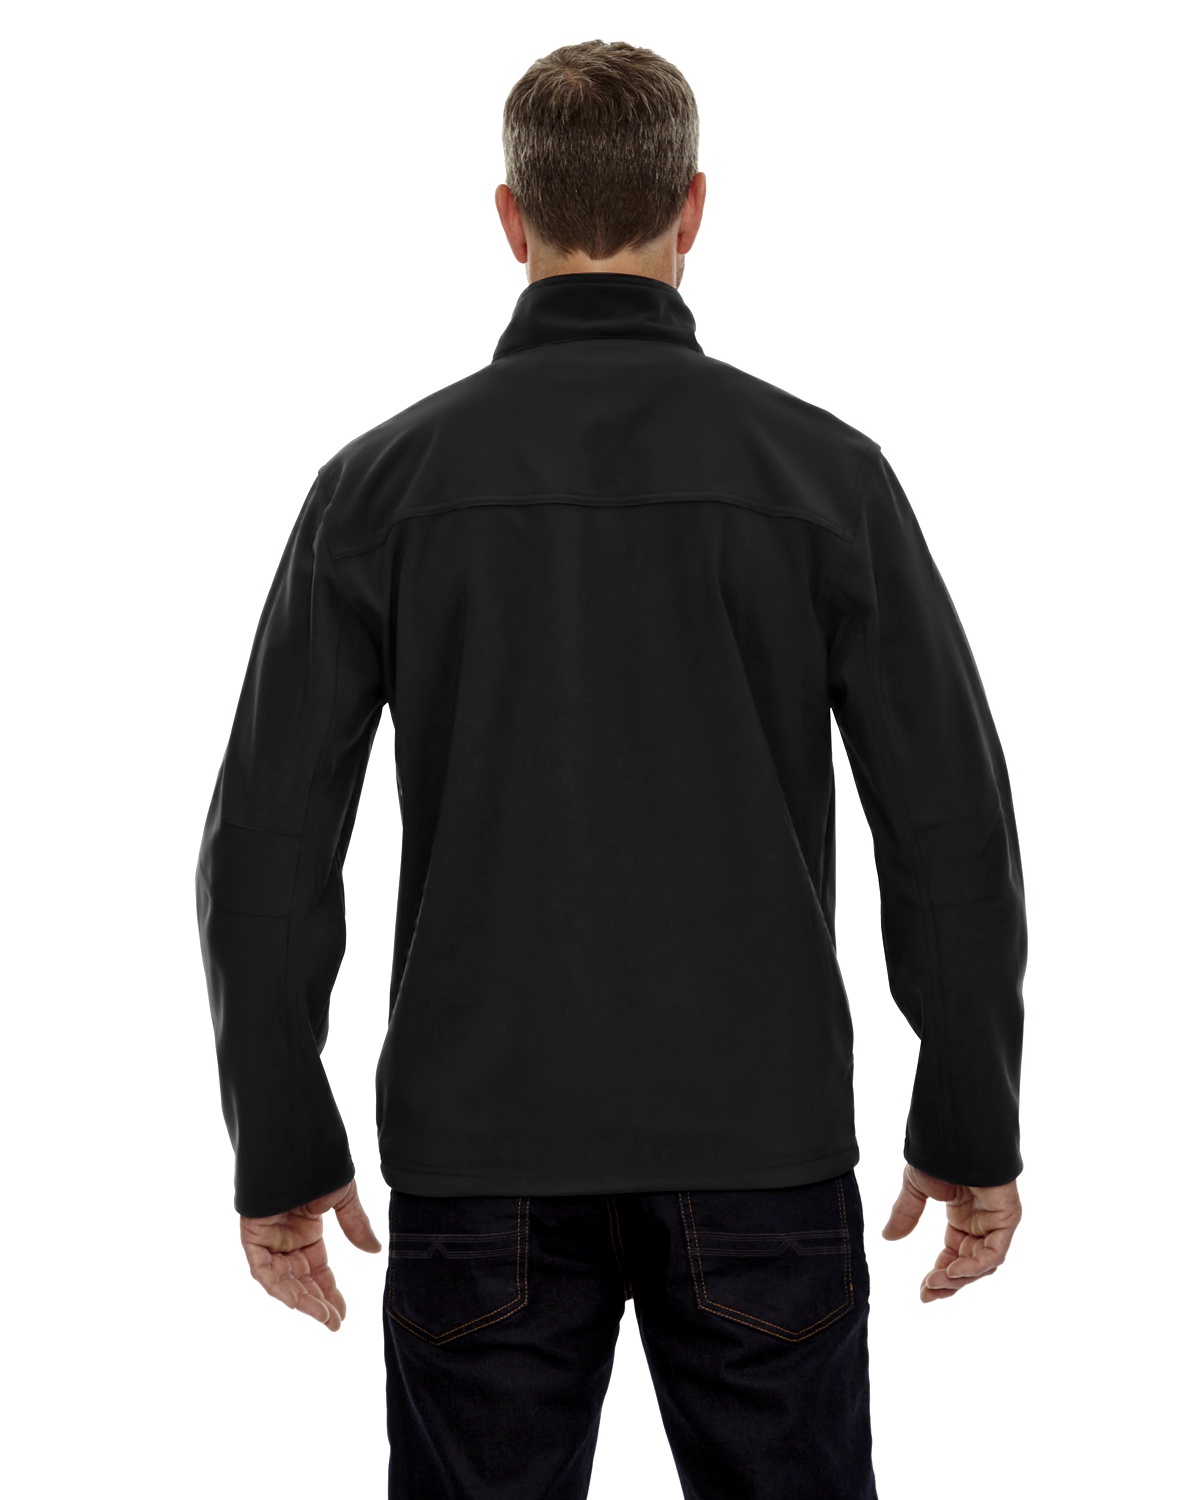 'Ash City - North End 88099 Men's Three-Layer Fleece Bonded Performance Soft Shell Jacket'